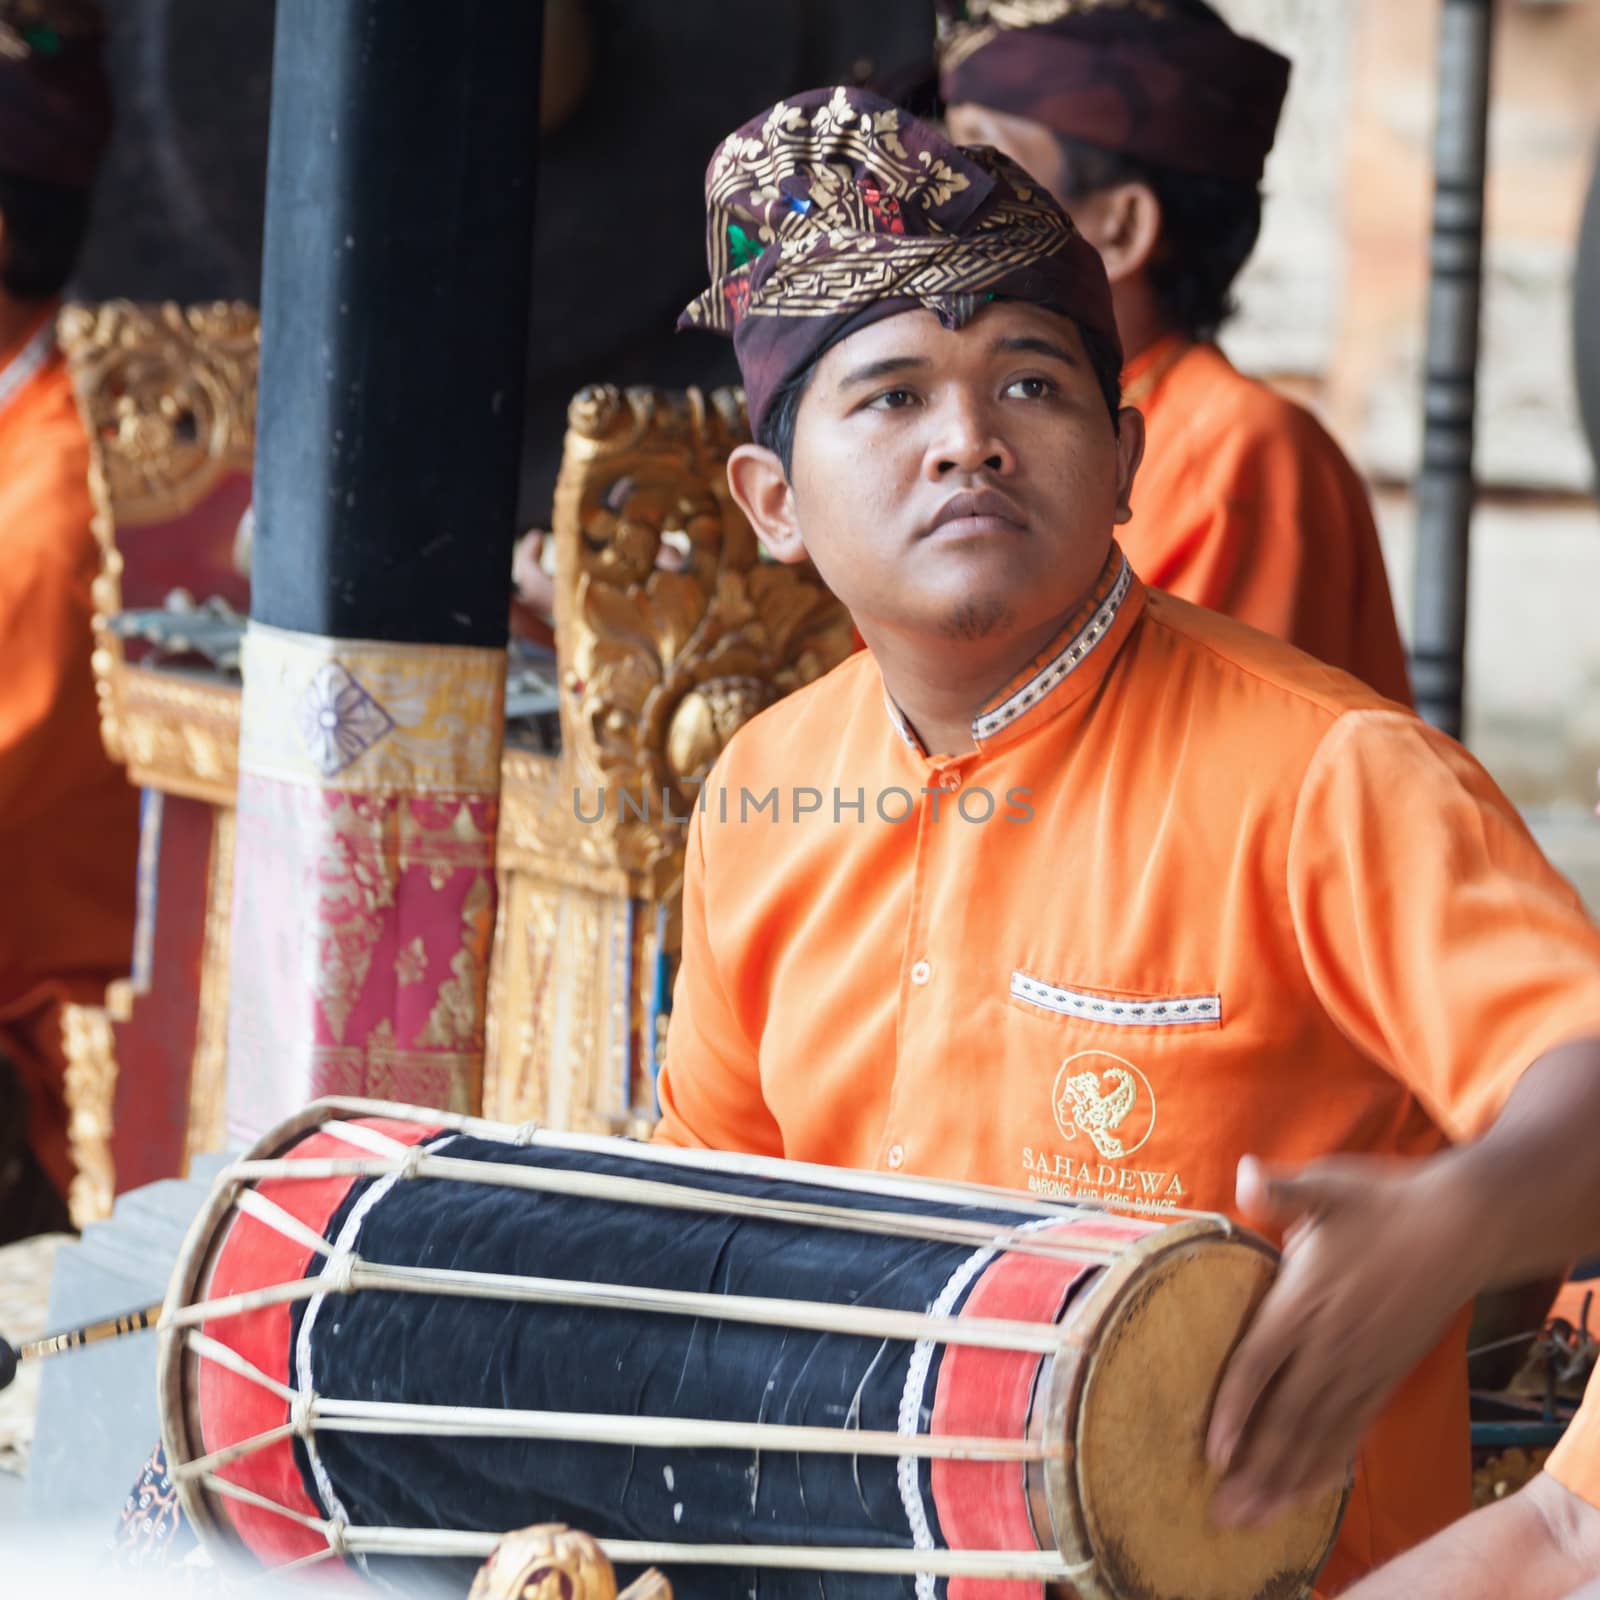 BALI - SEP 21: Musician on Barong and Kris Dance performs at Sahadewah, in Batubulan, Bali, Indonesia on Sep 21, 2012. This famous play represents an fight between good and bad gods.